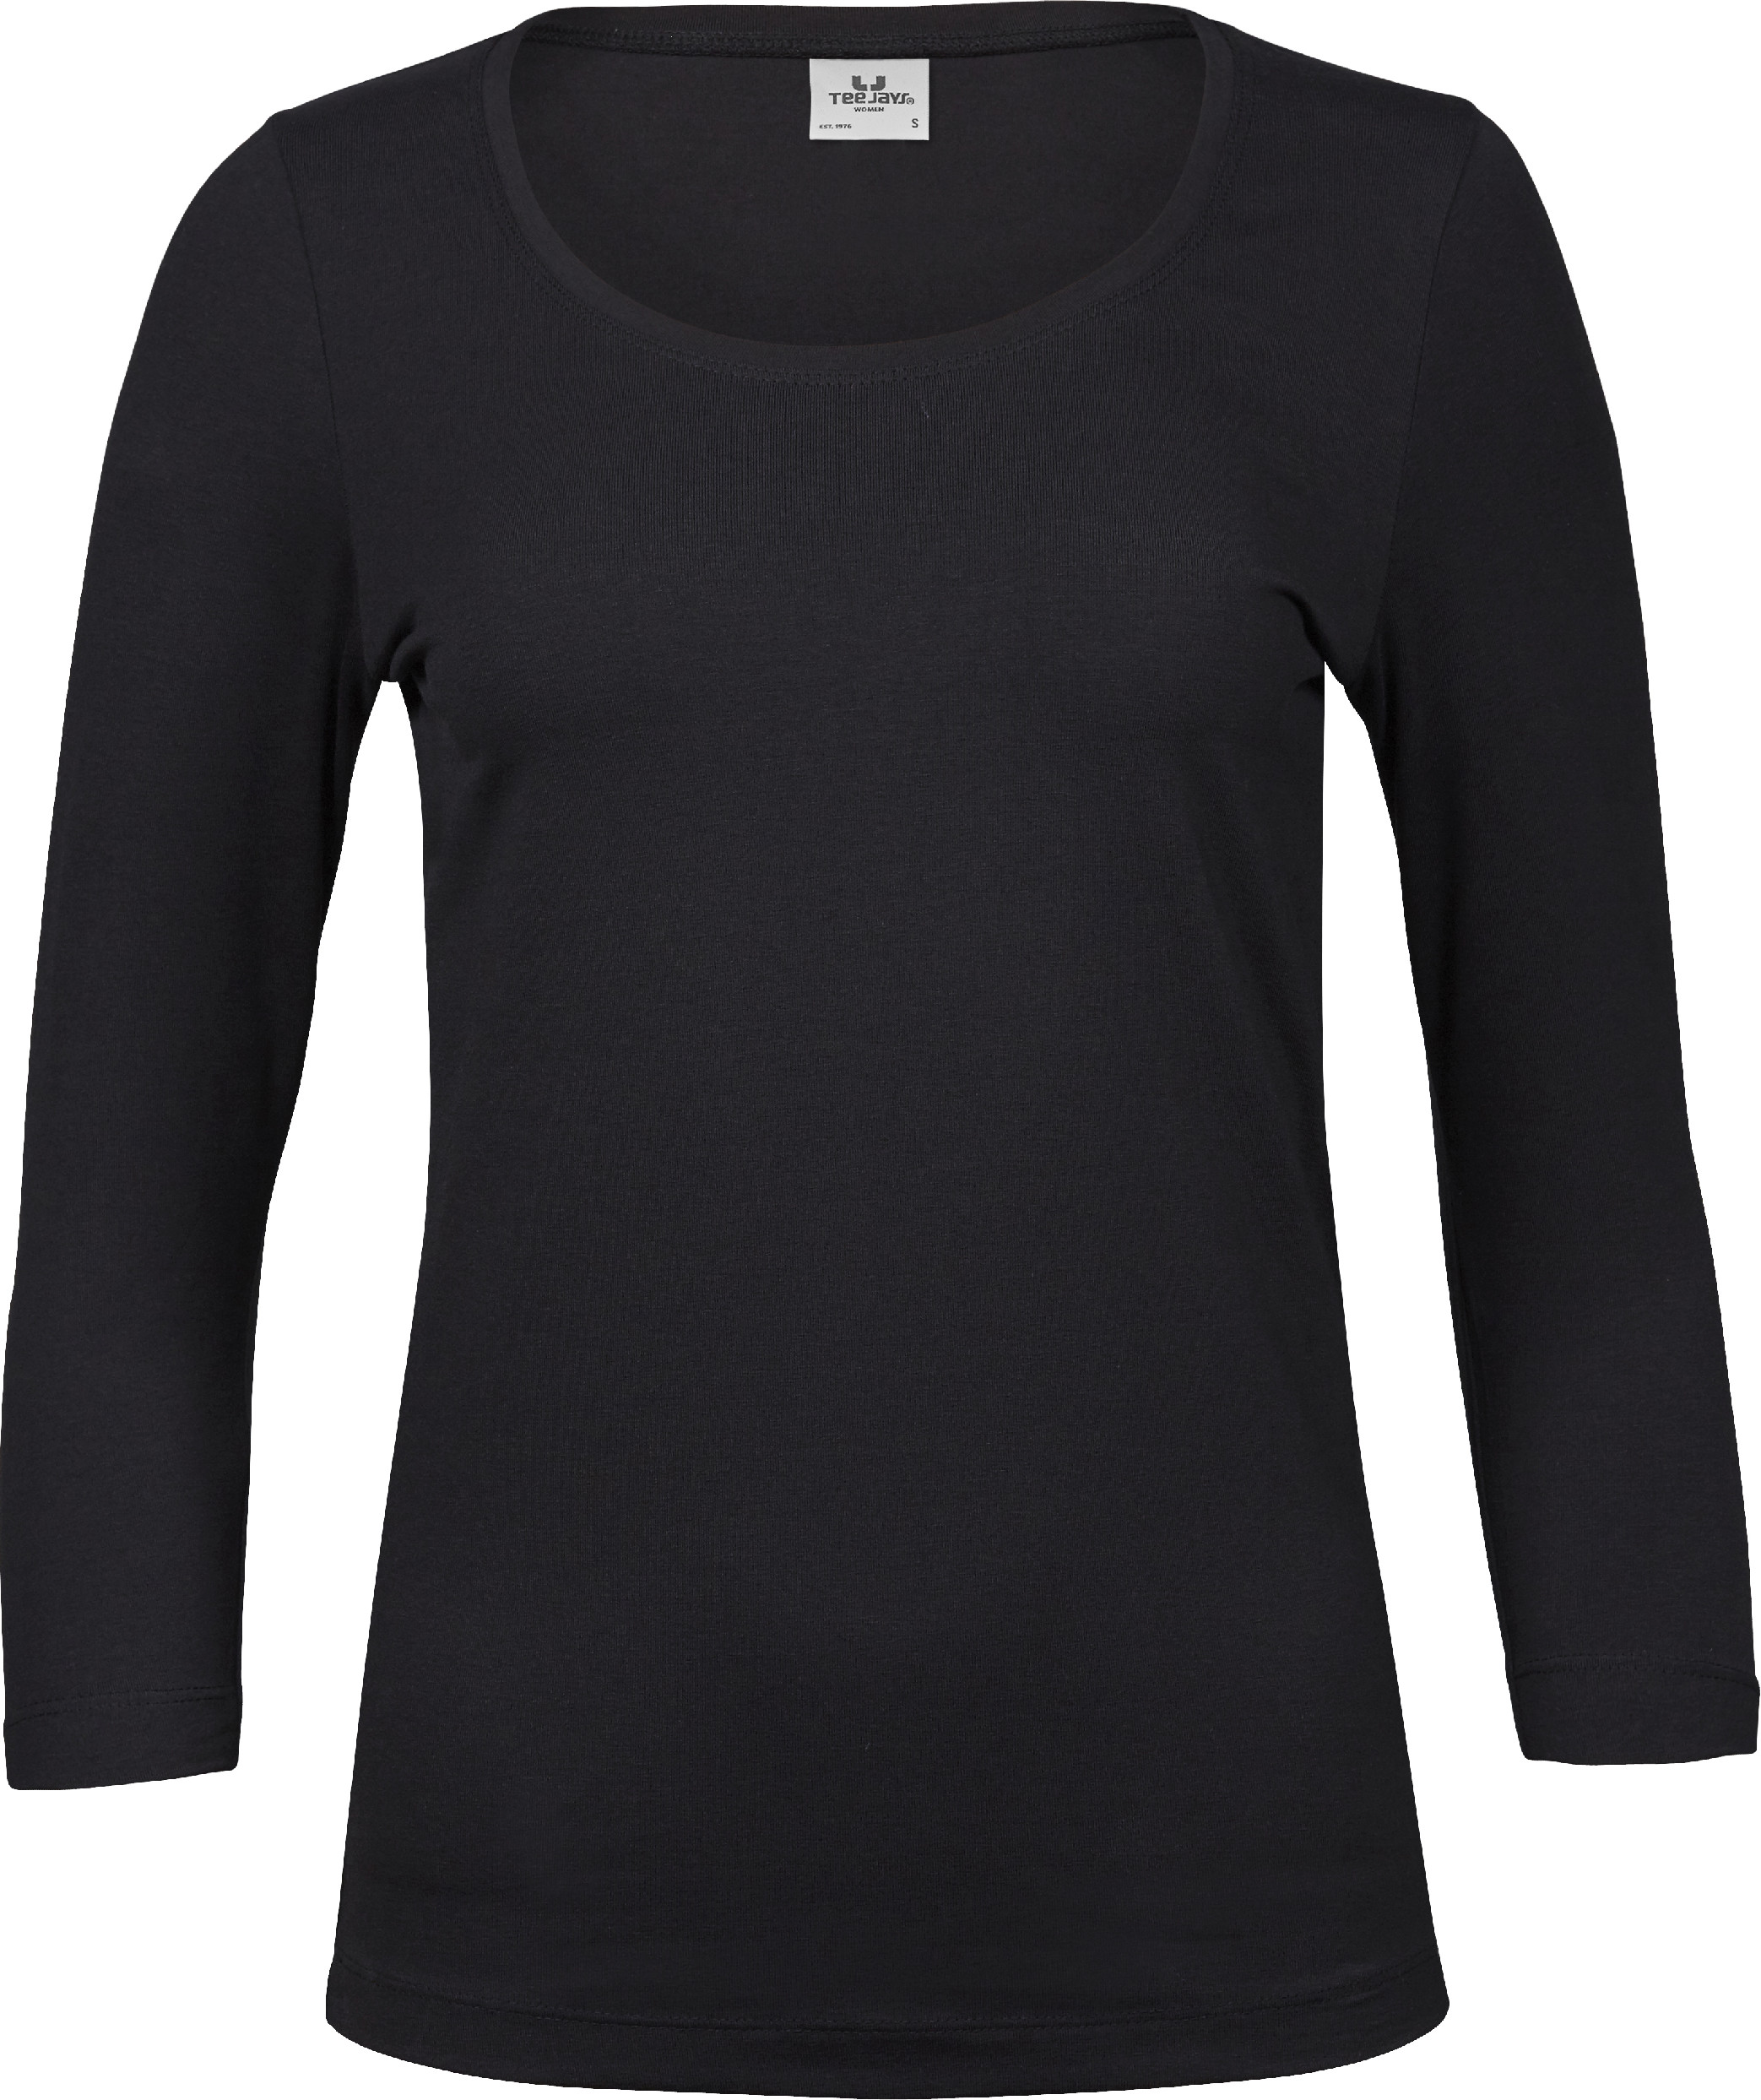 Dámské tričko 3/4 rukáv Stretch Tee Barva: černá, Velikost: XL